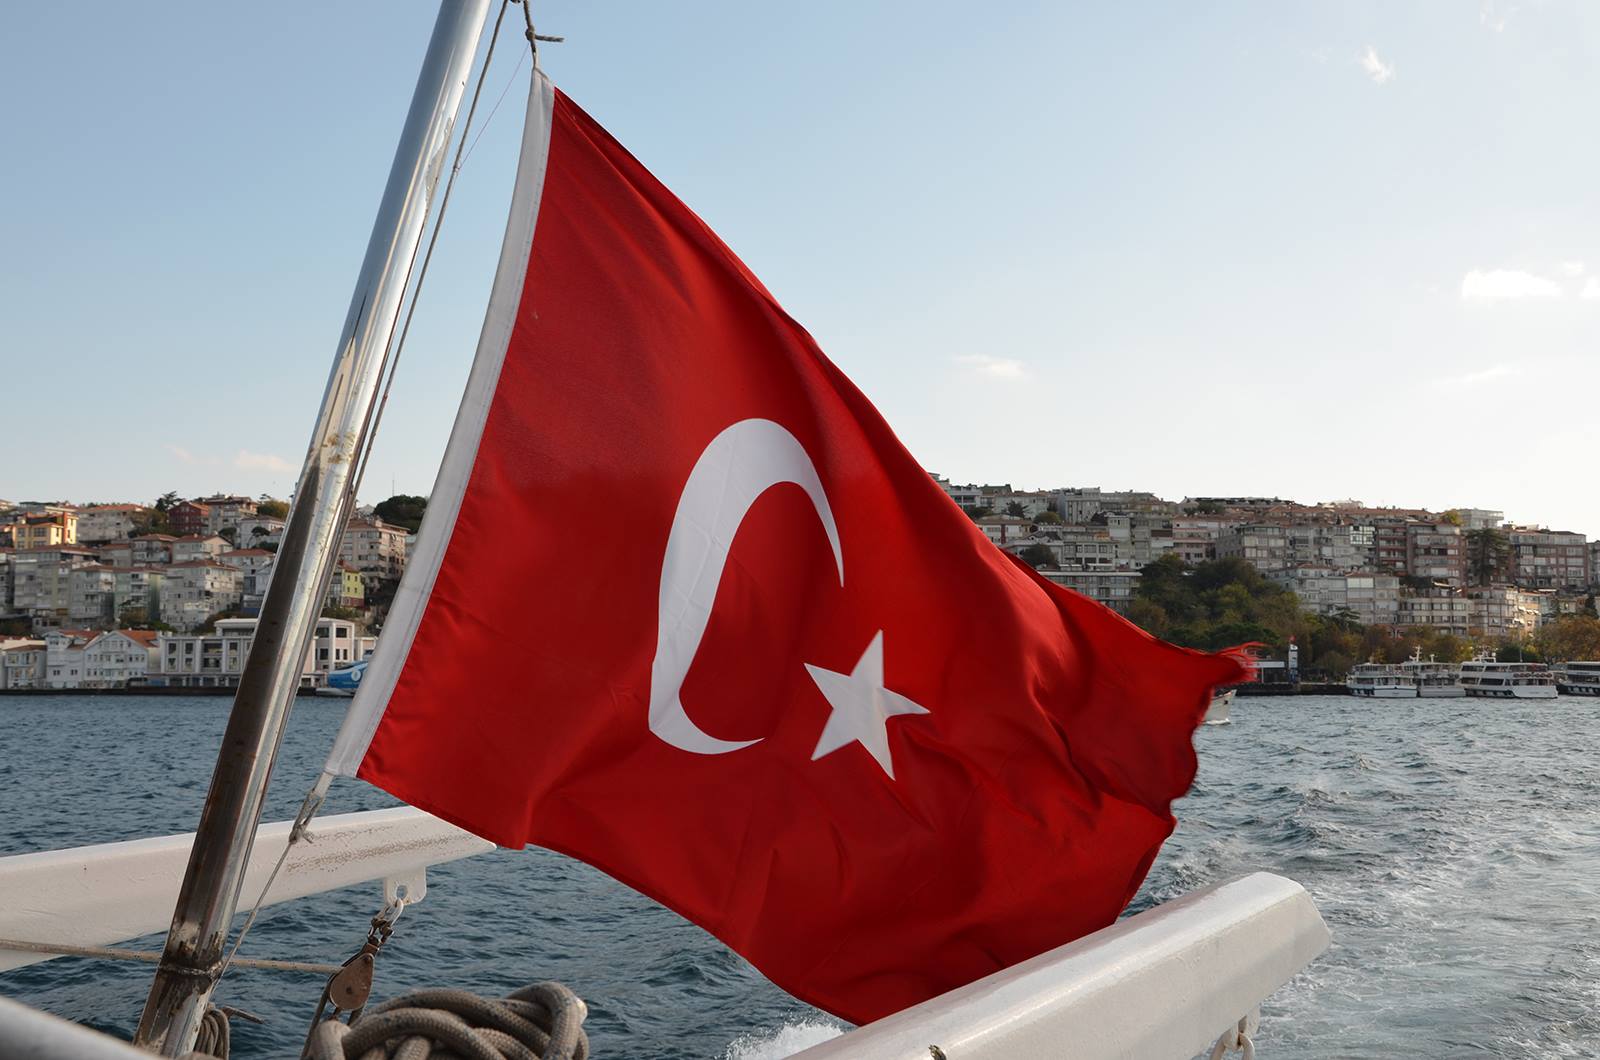 Tours to Turkey – new programmes in 2023